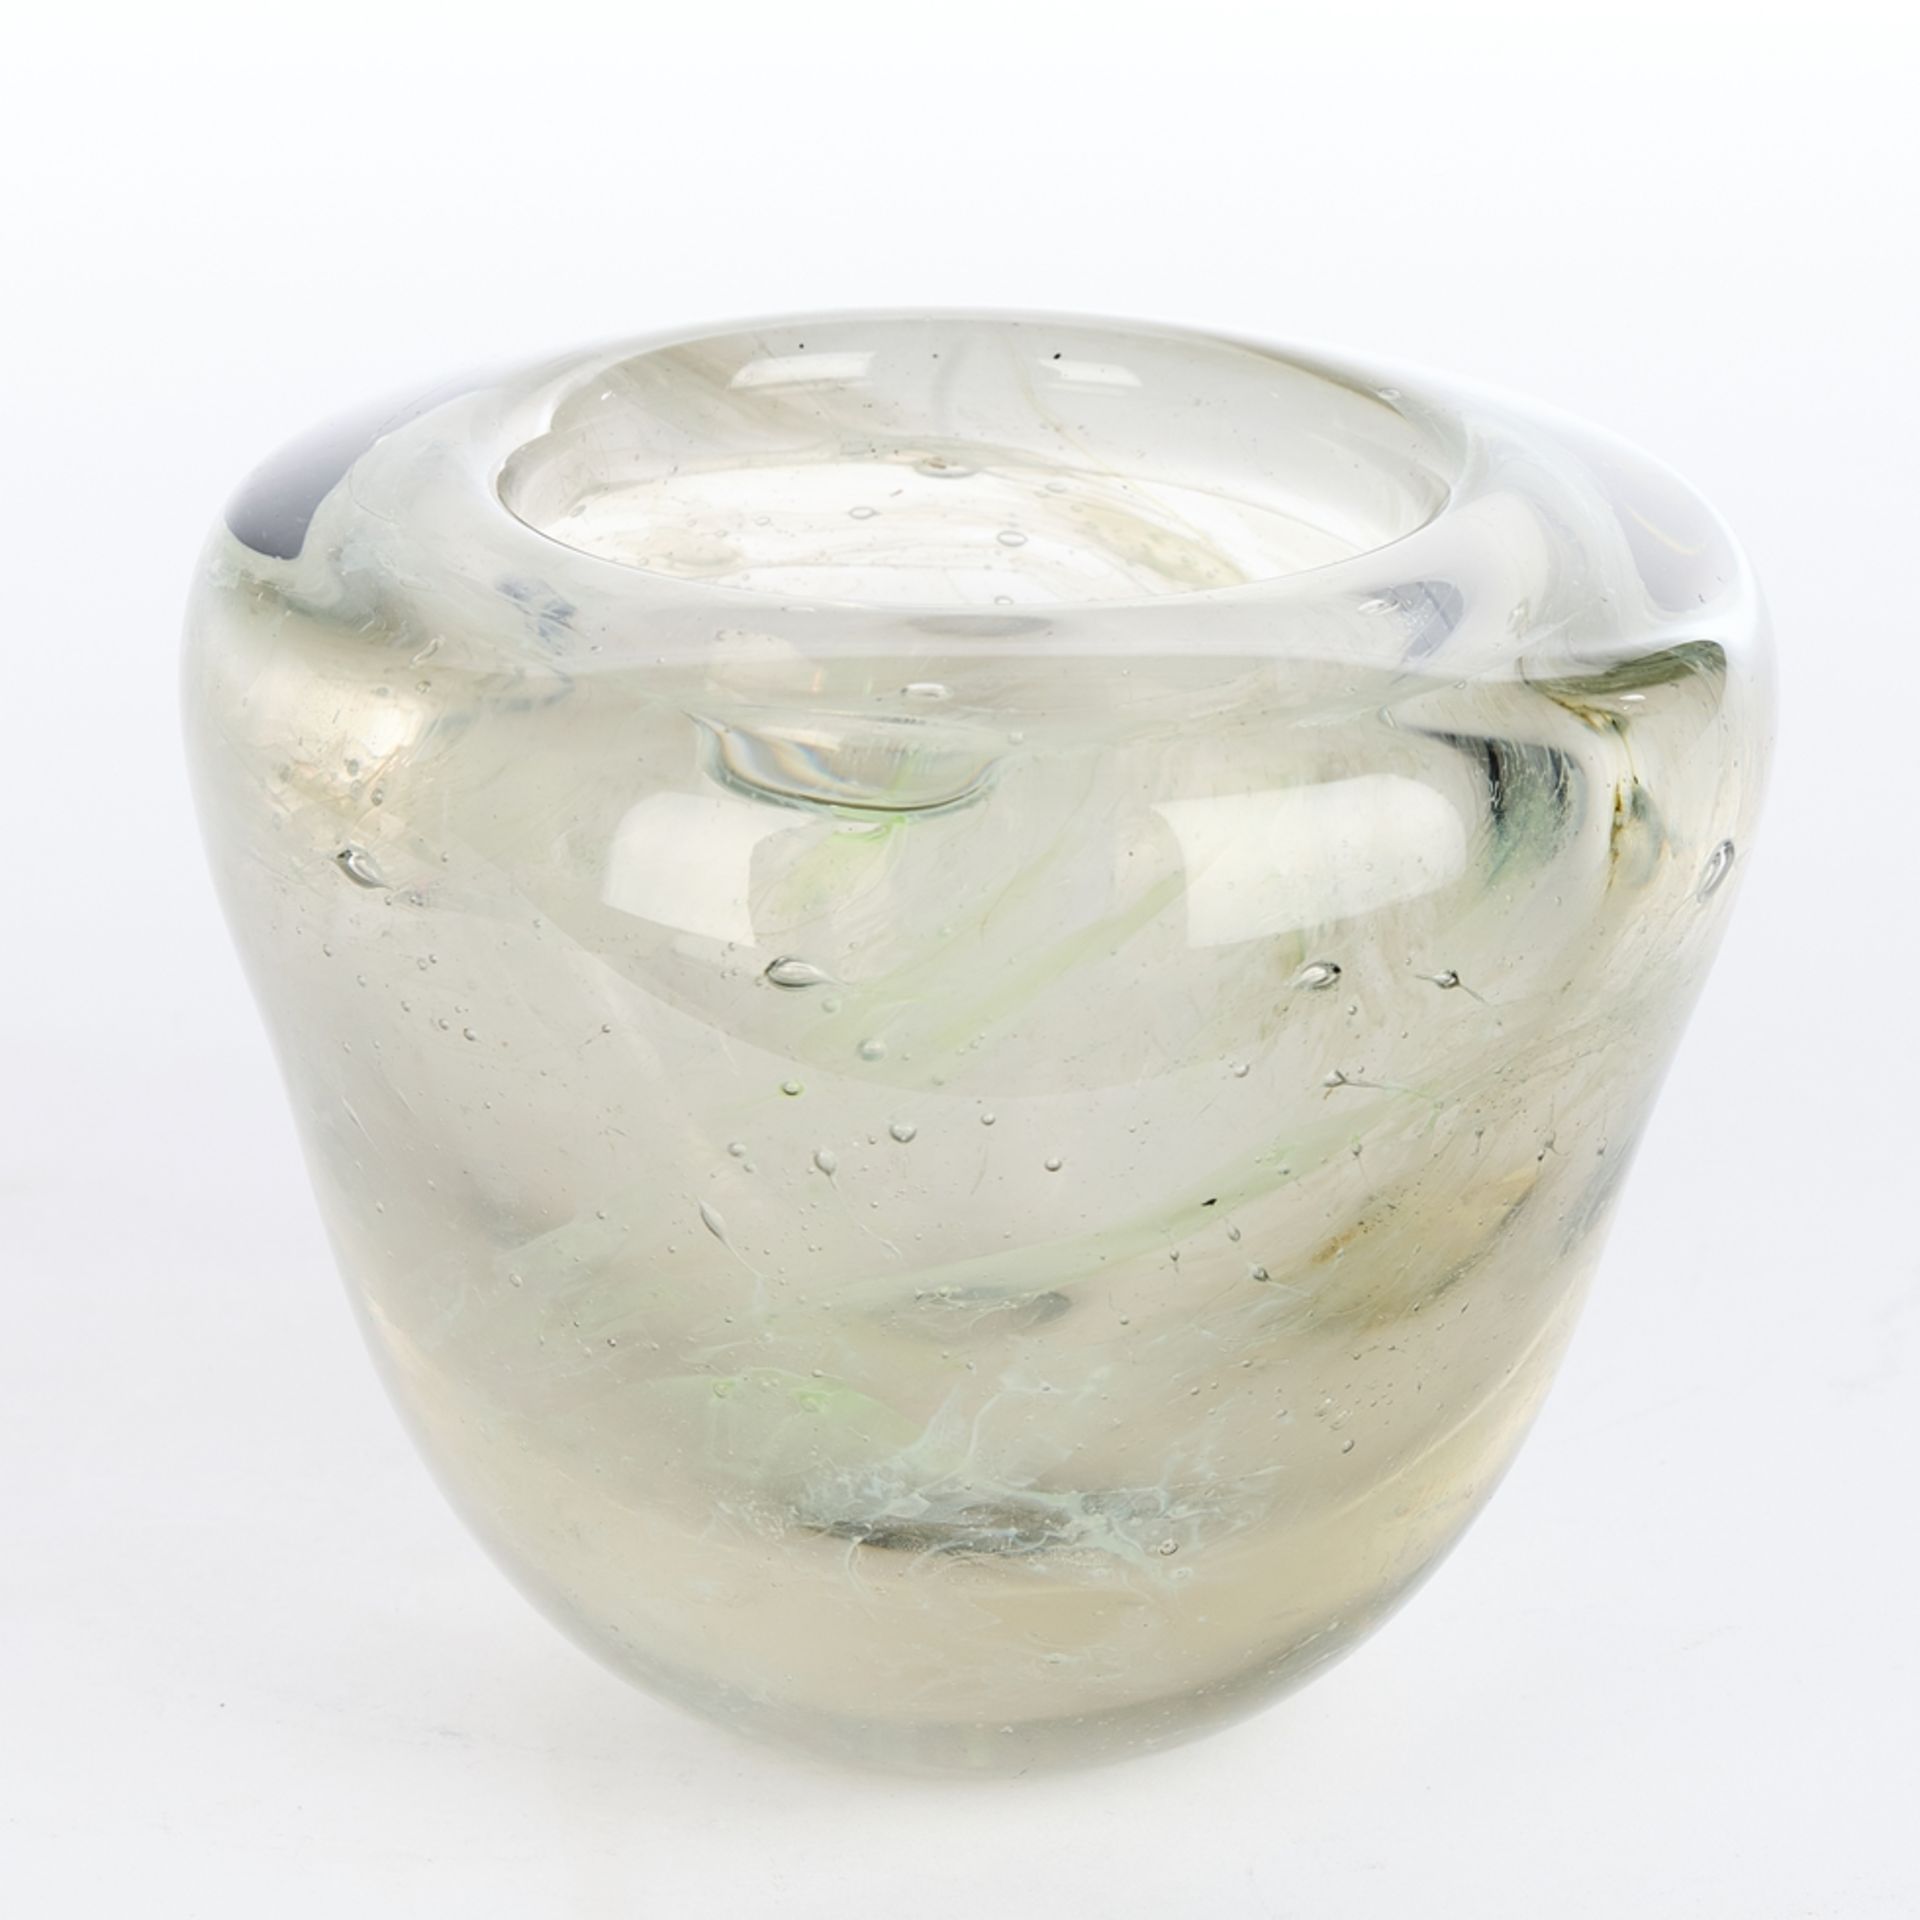 Andries, Dirk Copier, Glasfabriek Leerdam, Vase, Studioglas, Unikat, dickwandige Ovalform, durchsic - Bild 2 aus 3